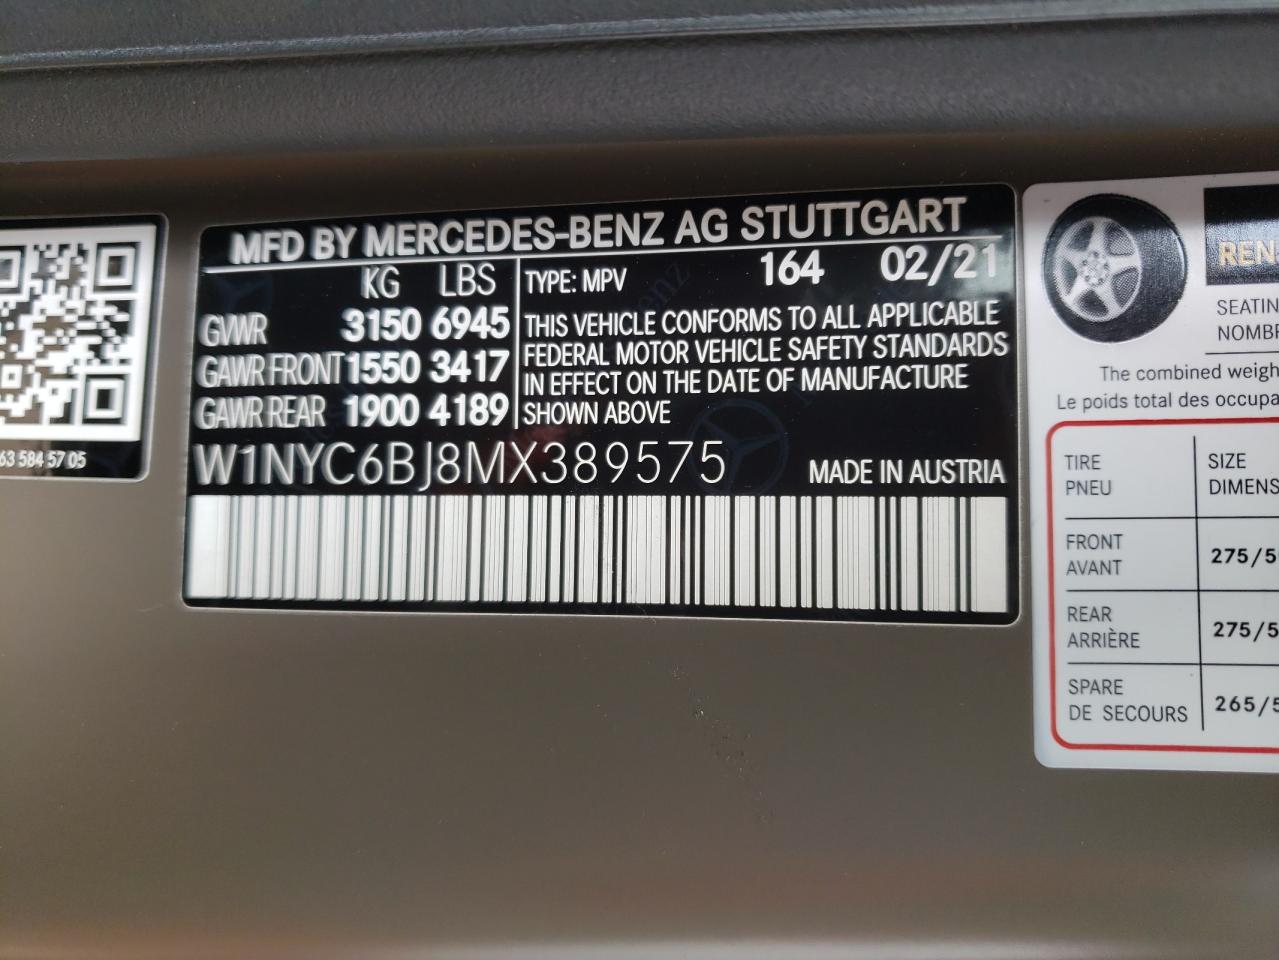 2021 Mercedes-Benz G 550 vin: W1NYC6BJ8MX389575